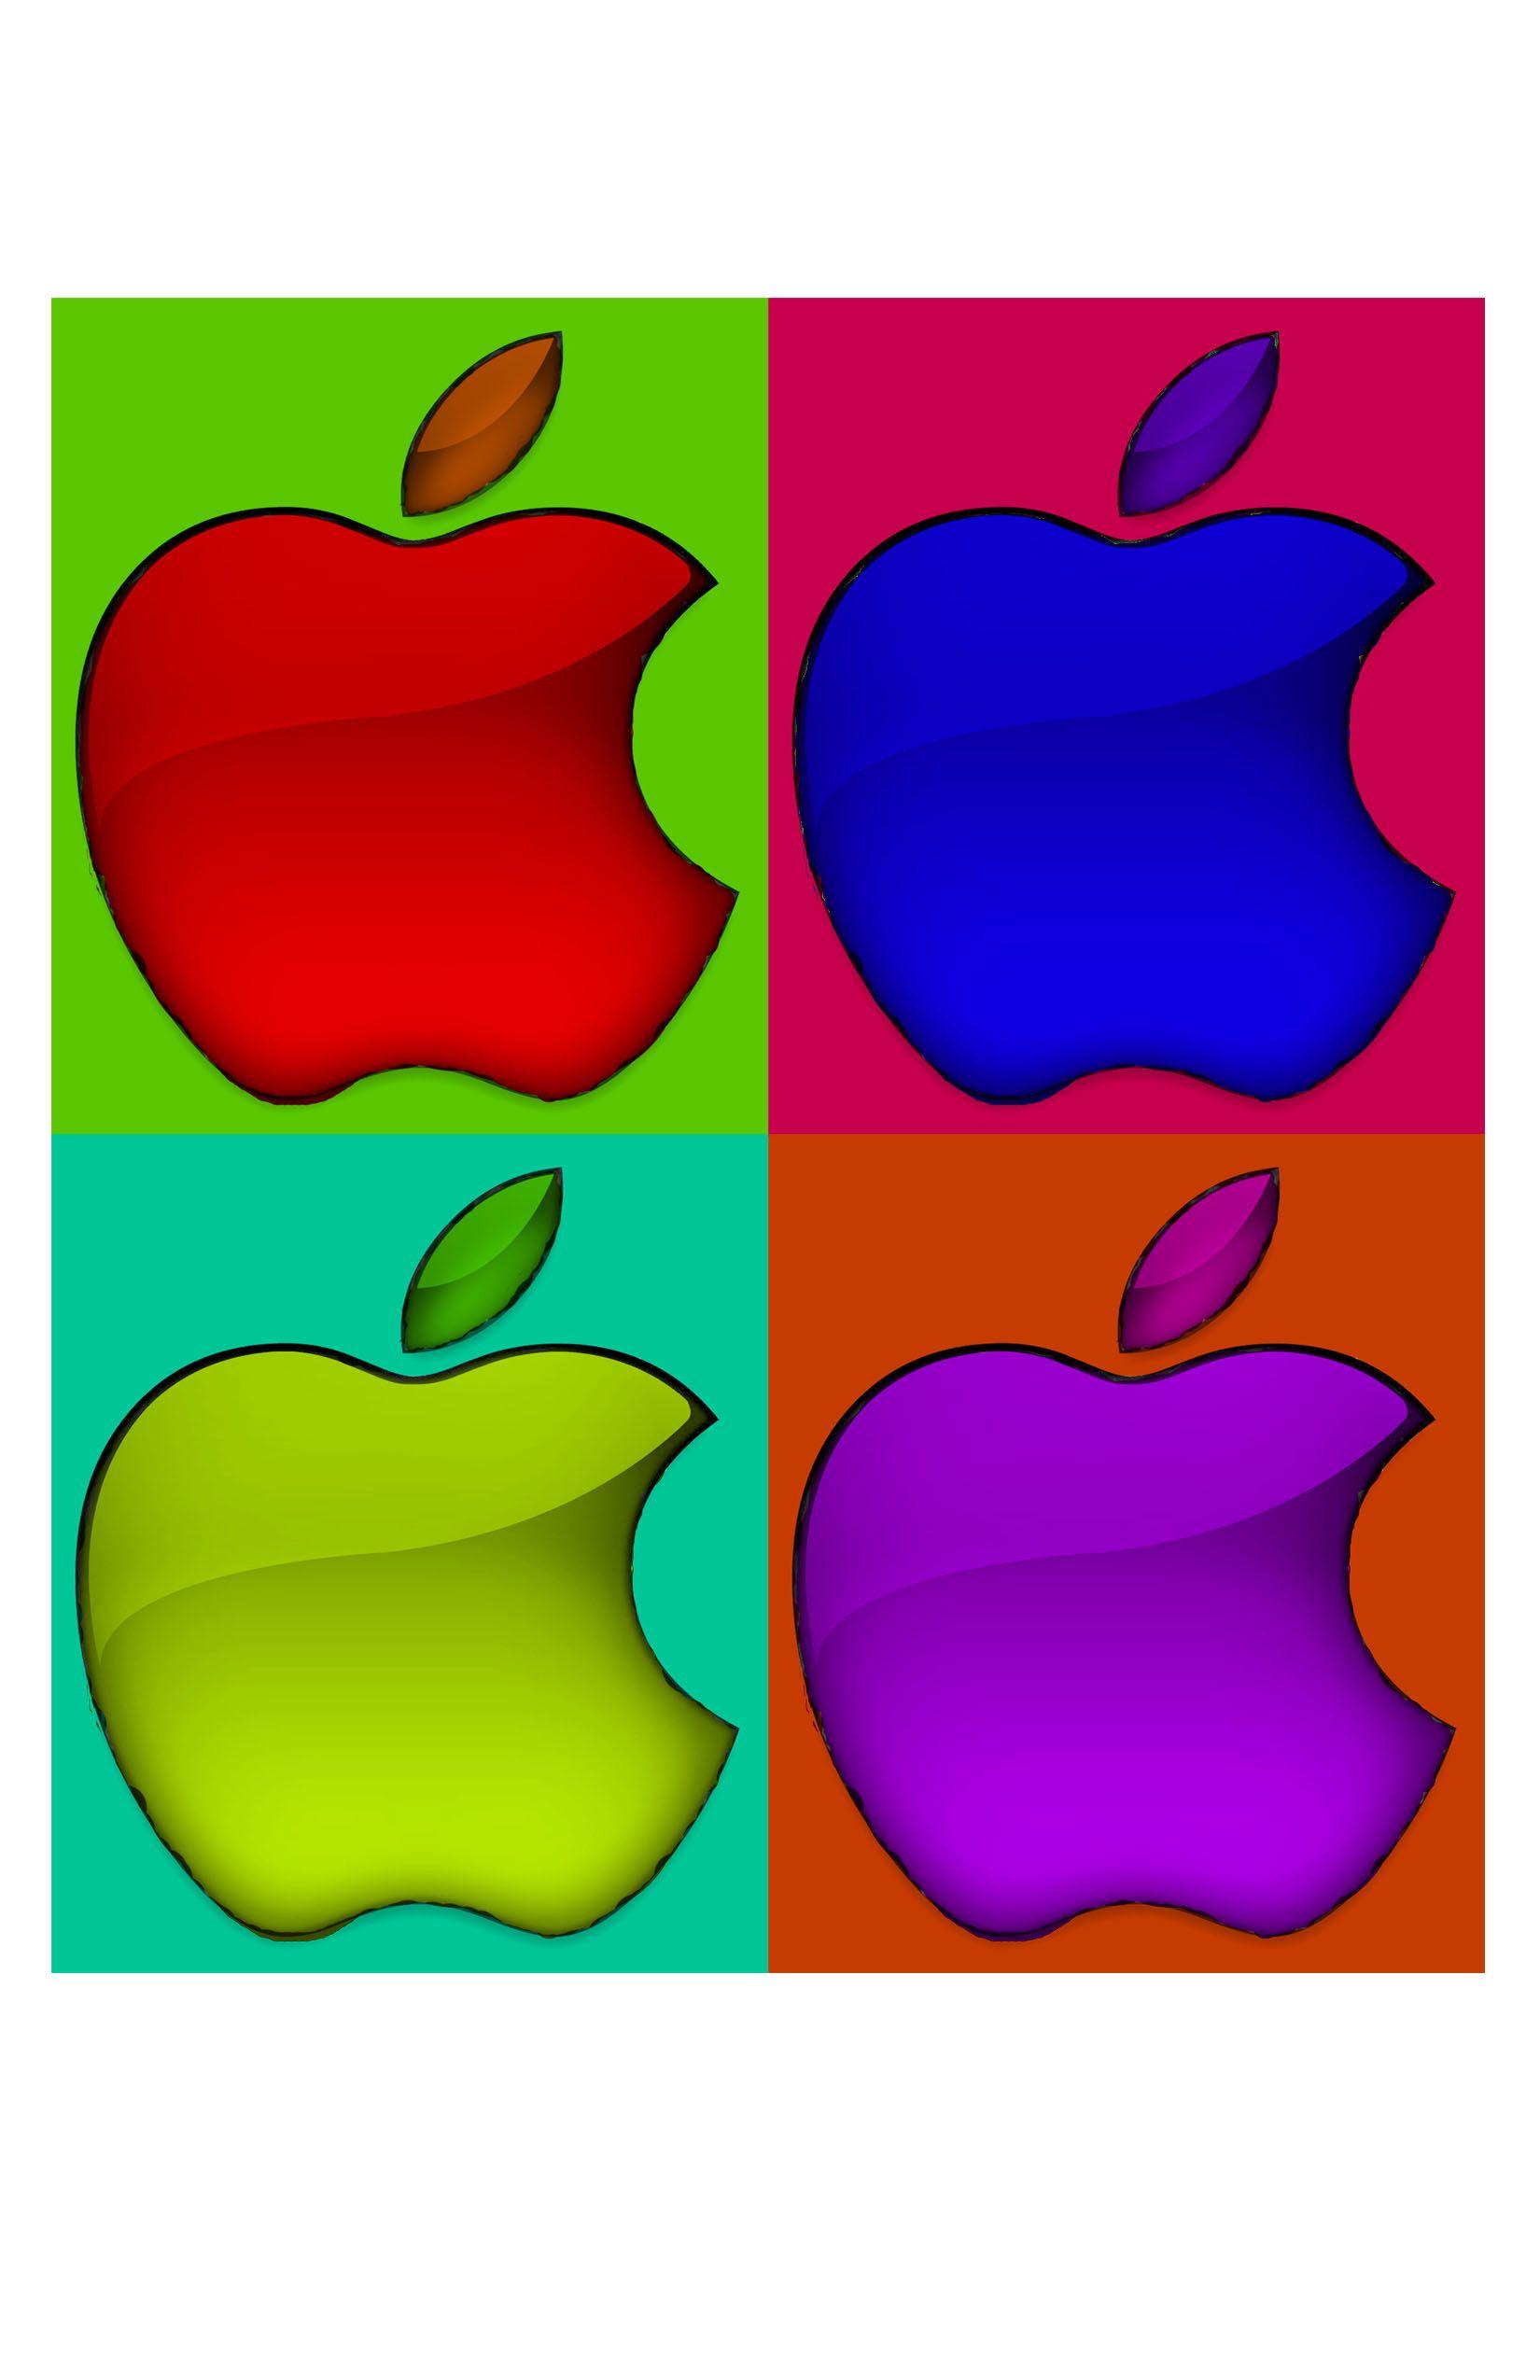 Andy Warhol Logo - Andy Warhol, Apple Logo. Possible art nite projects